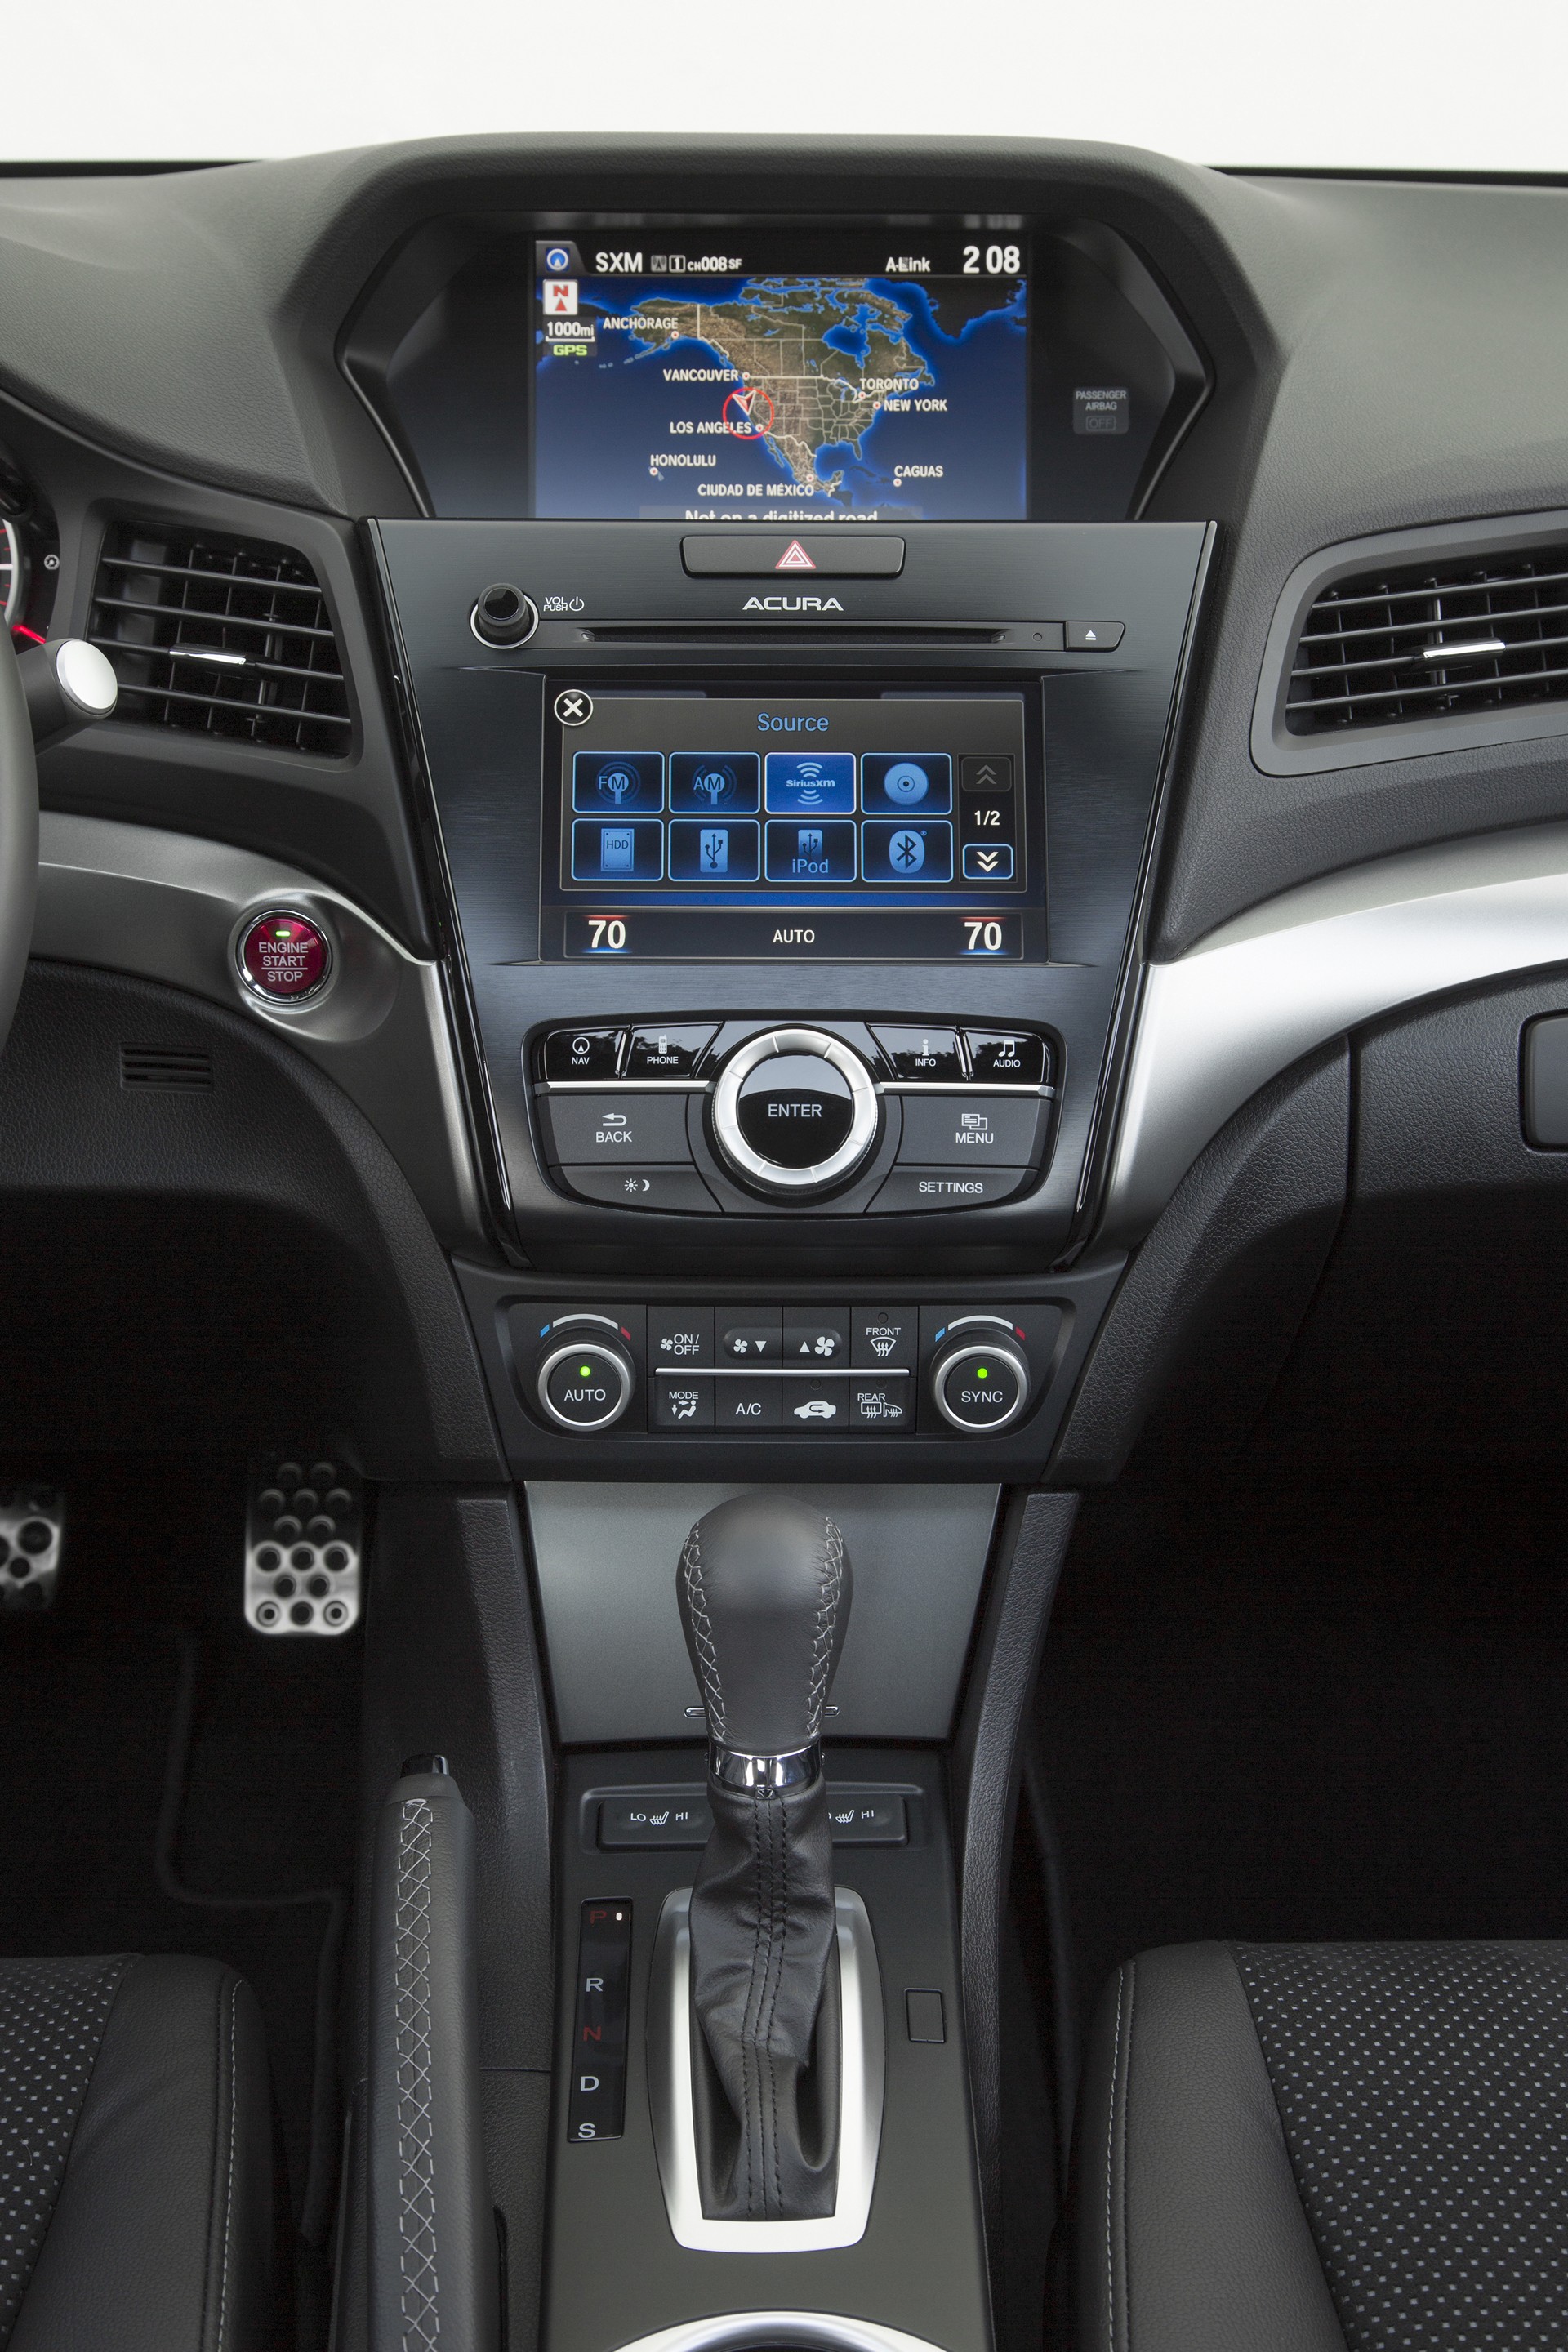 2016 Acura Ilx Review Carrrs Auto Portal